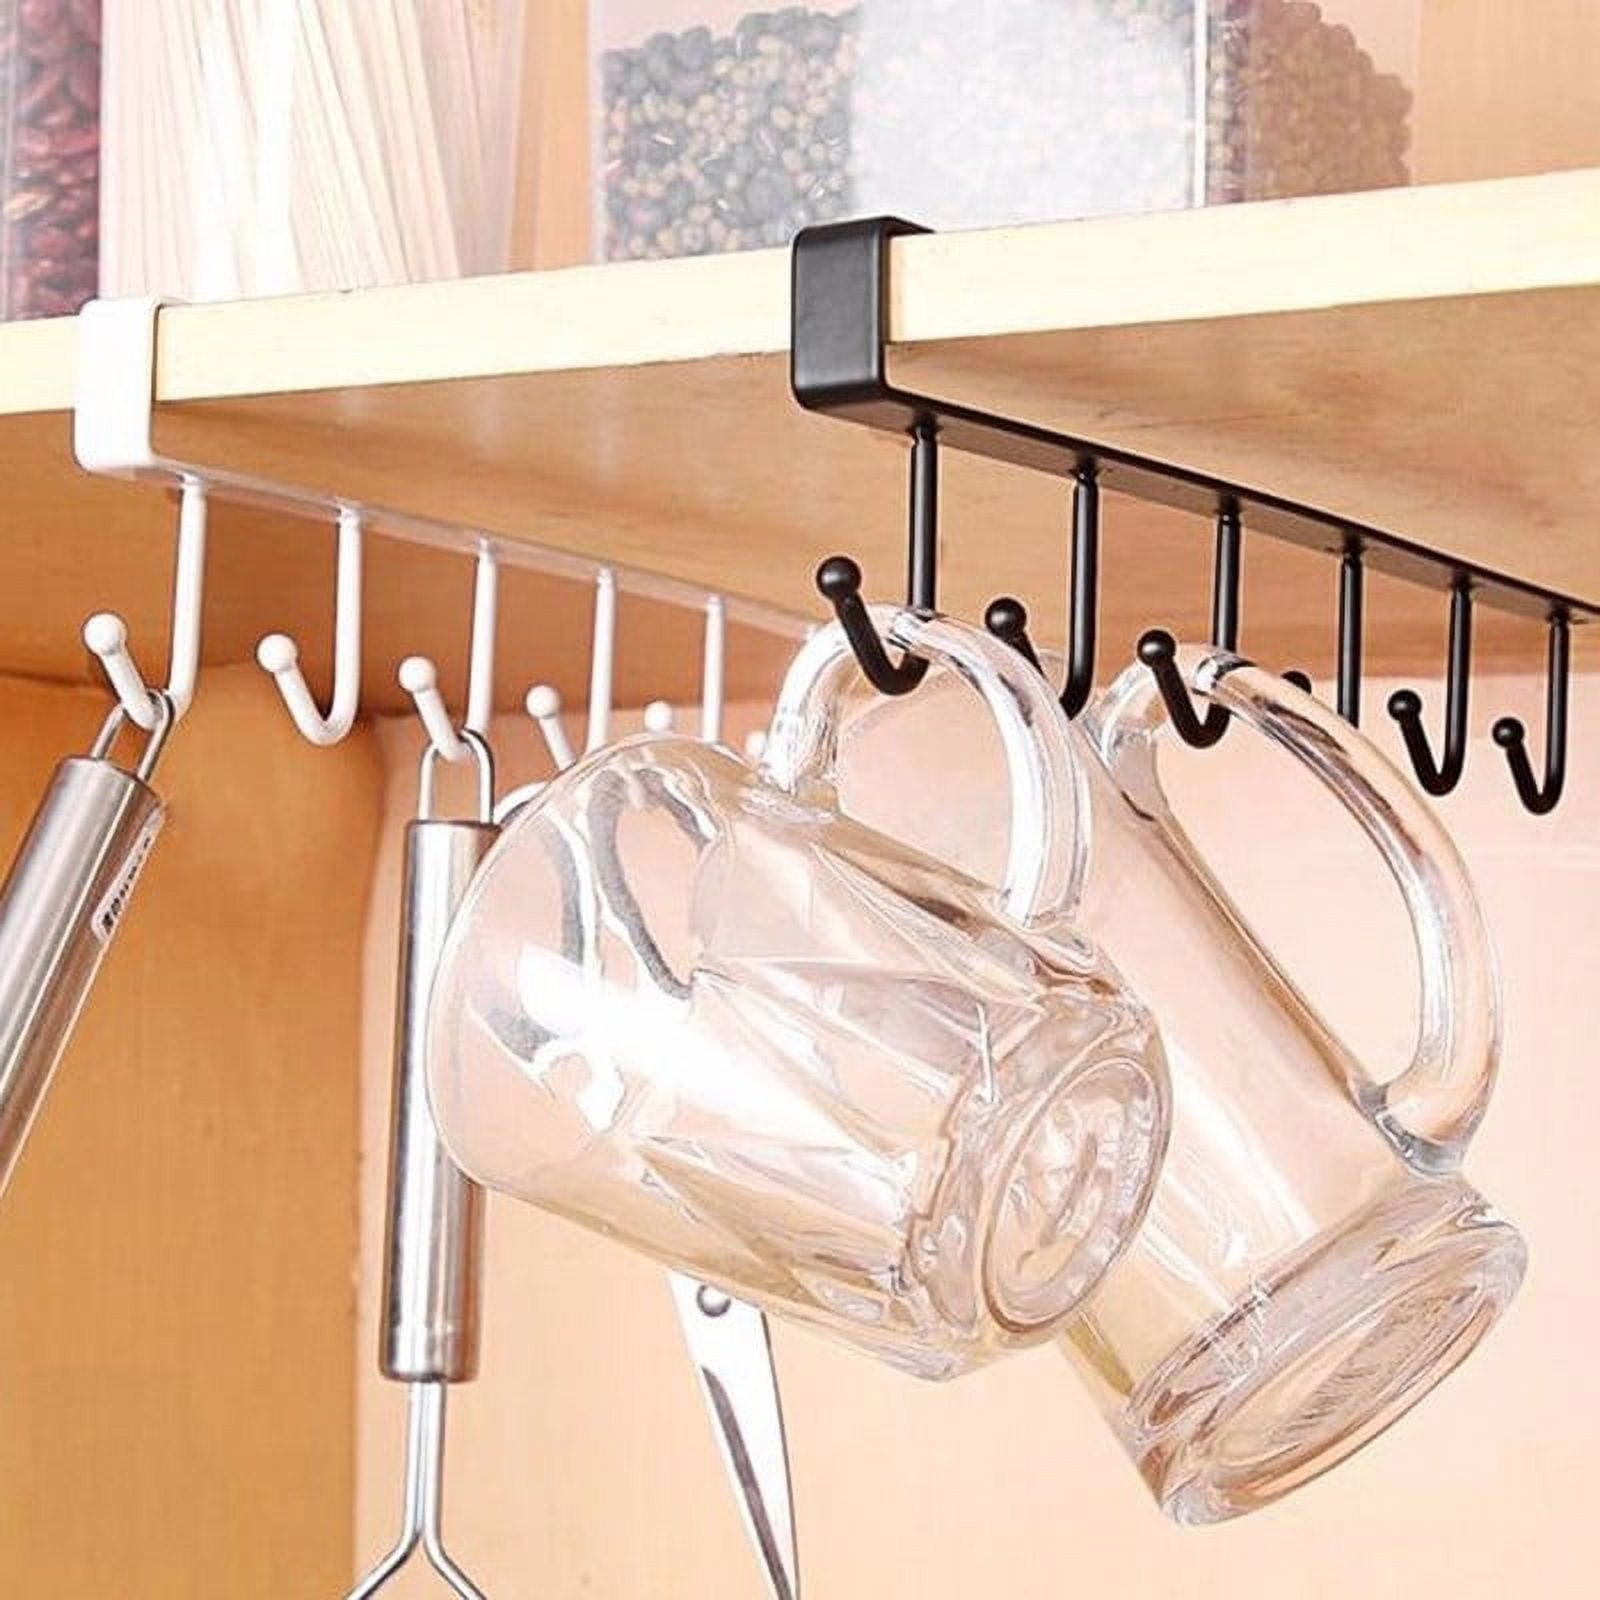 Euwbssr 2 Piece Metal 6 Hook Mug Rack Hanging Wardrobe Kitchen Organizer Coffee Tea Cup Holder Under Shelf Cabinet Hanging Holder, Size: 2pcs, Black